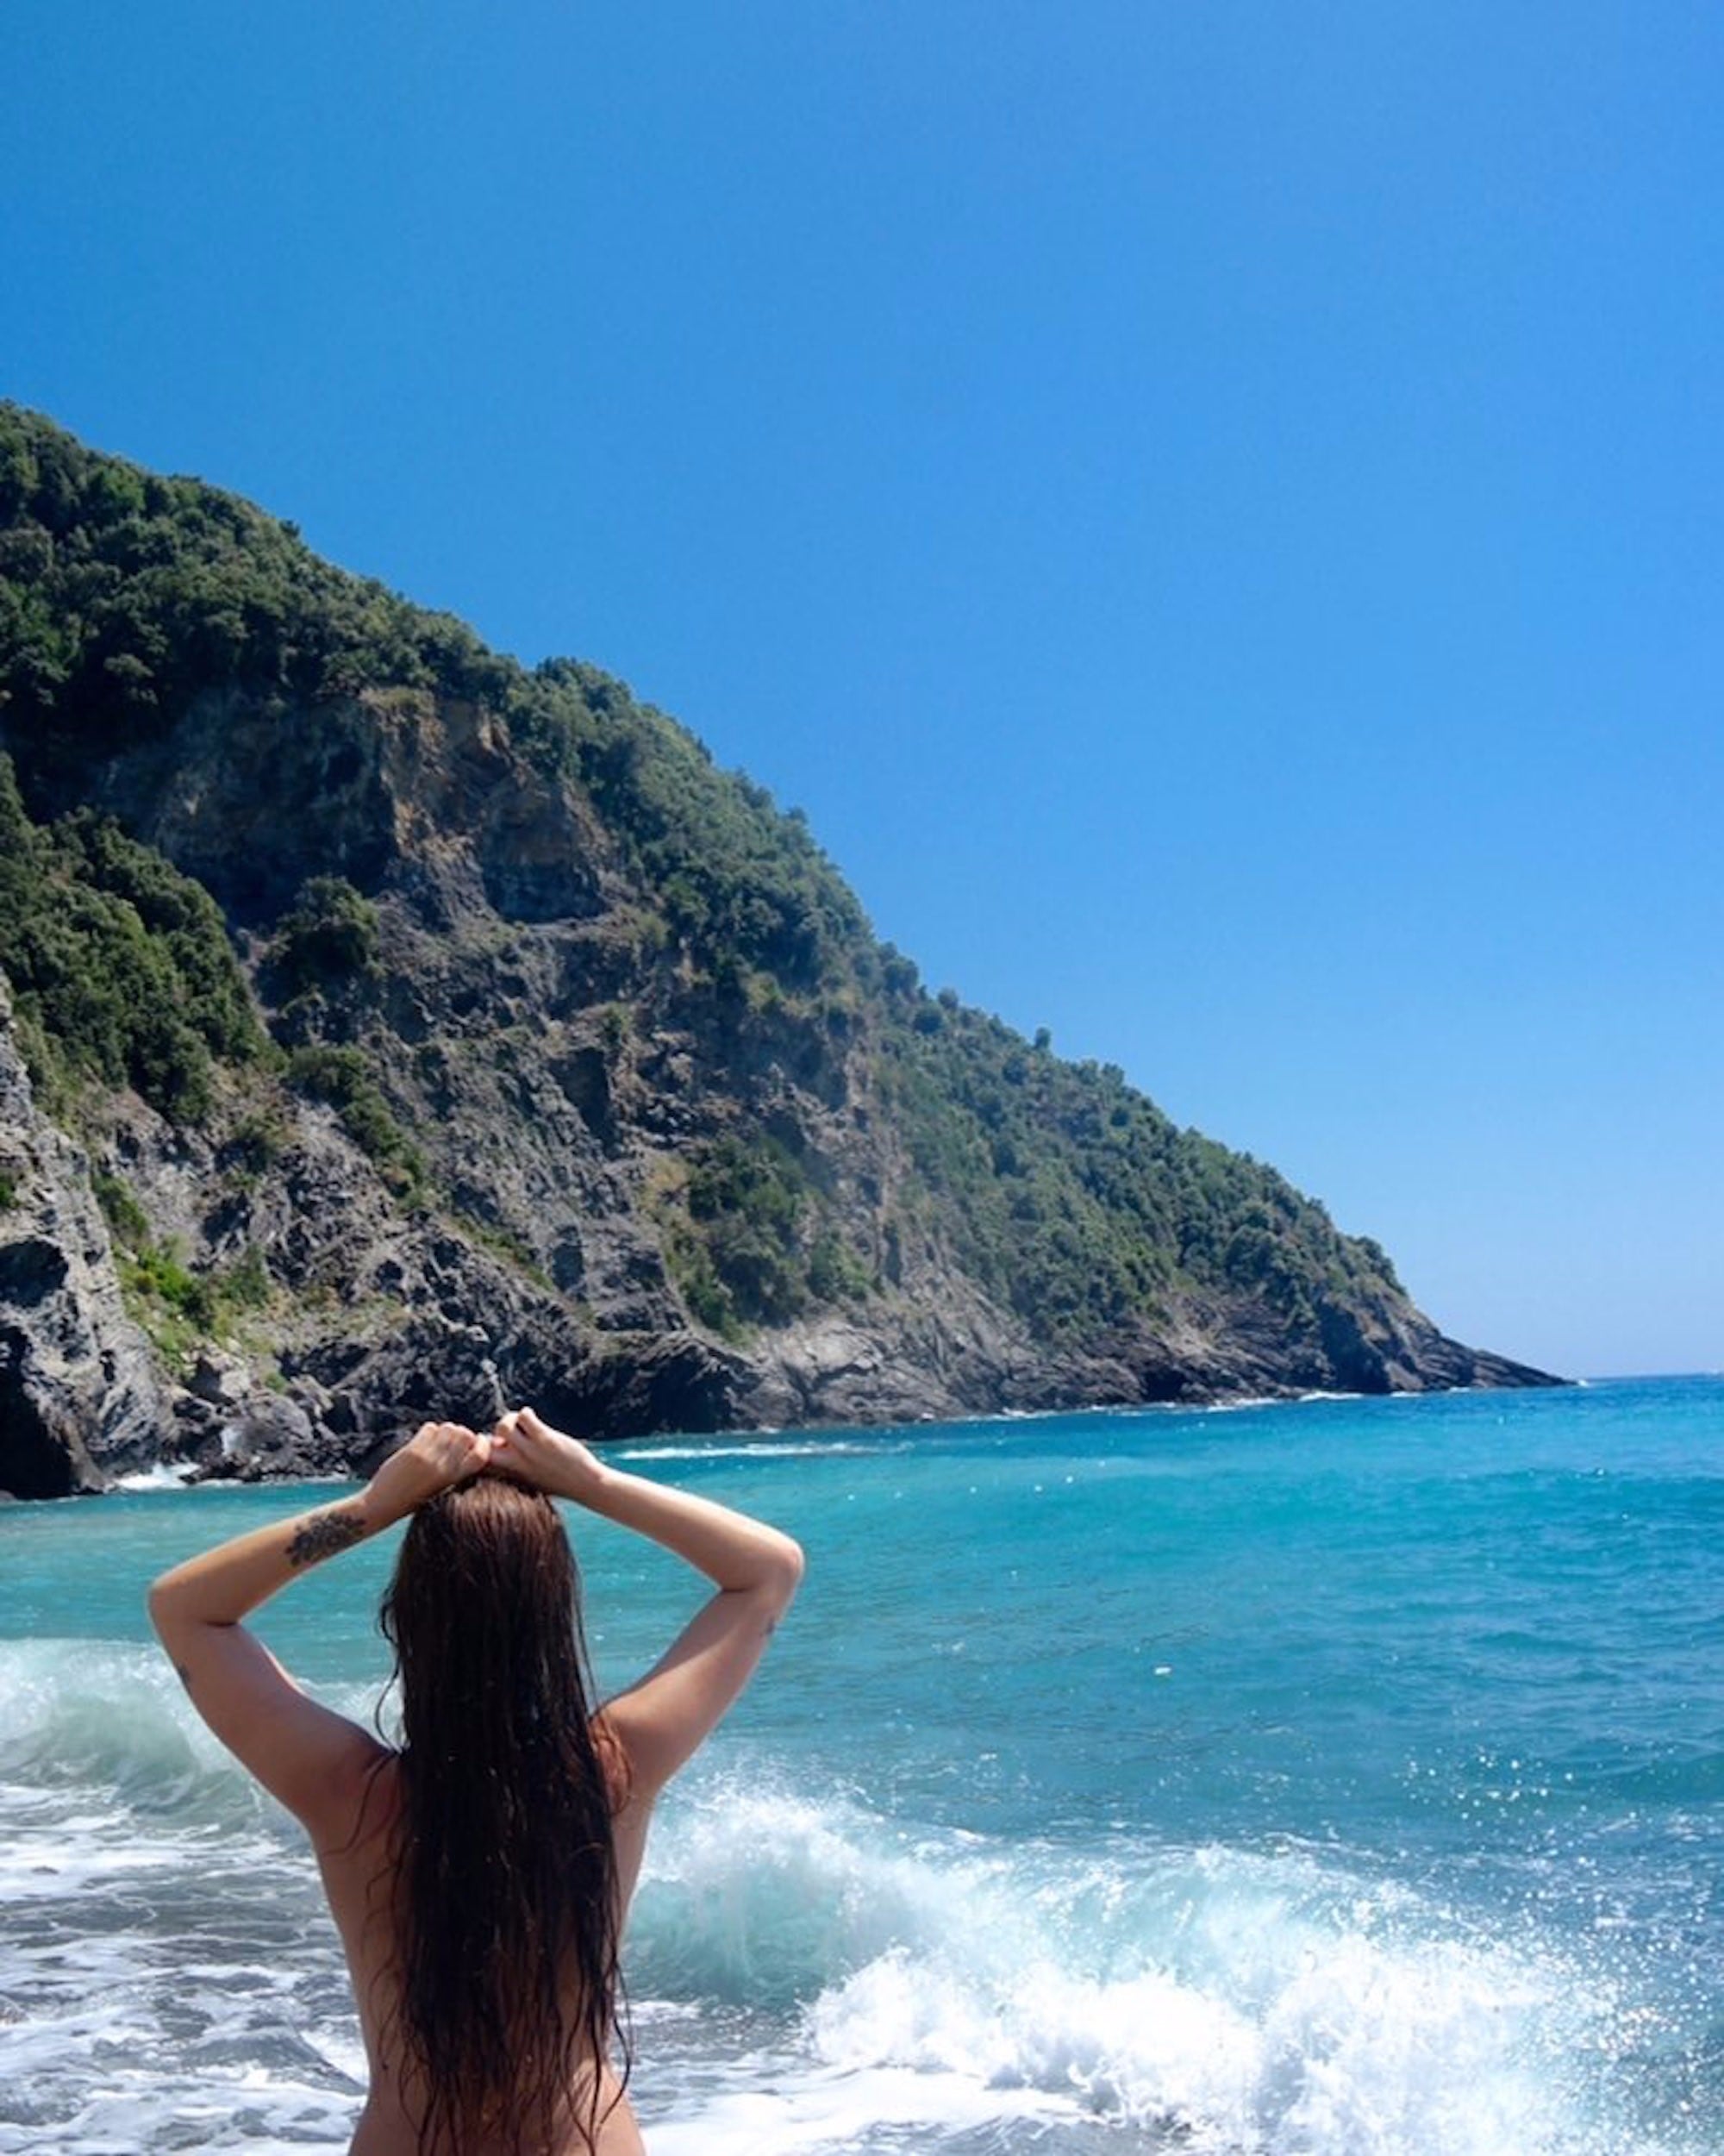 Topless Beach Sex Videos - Hidden Nude Beach in Cinque Terre, Italy | POPSUGAR Smart Living